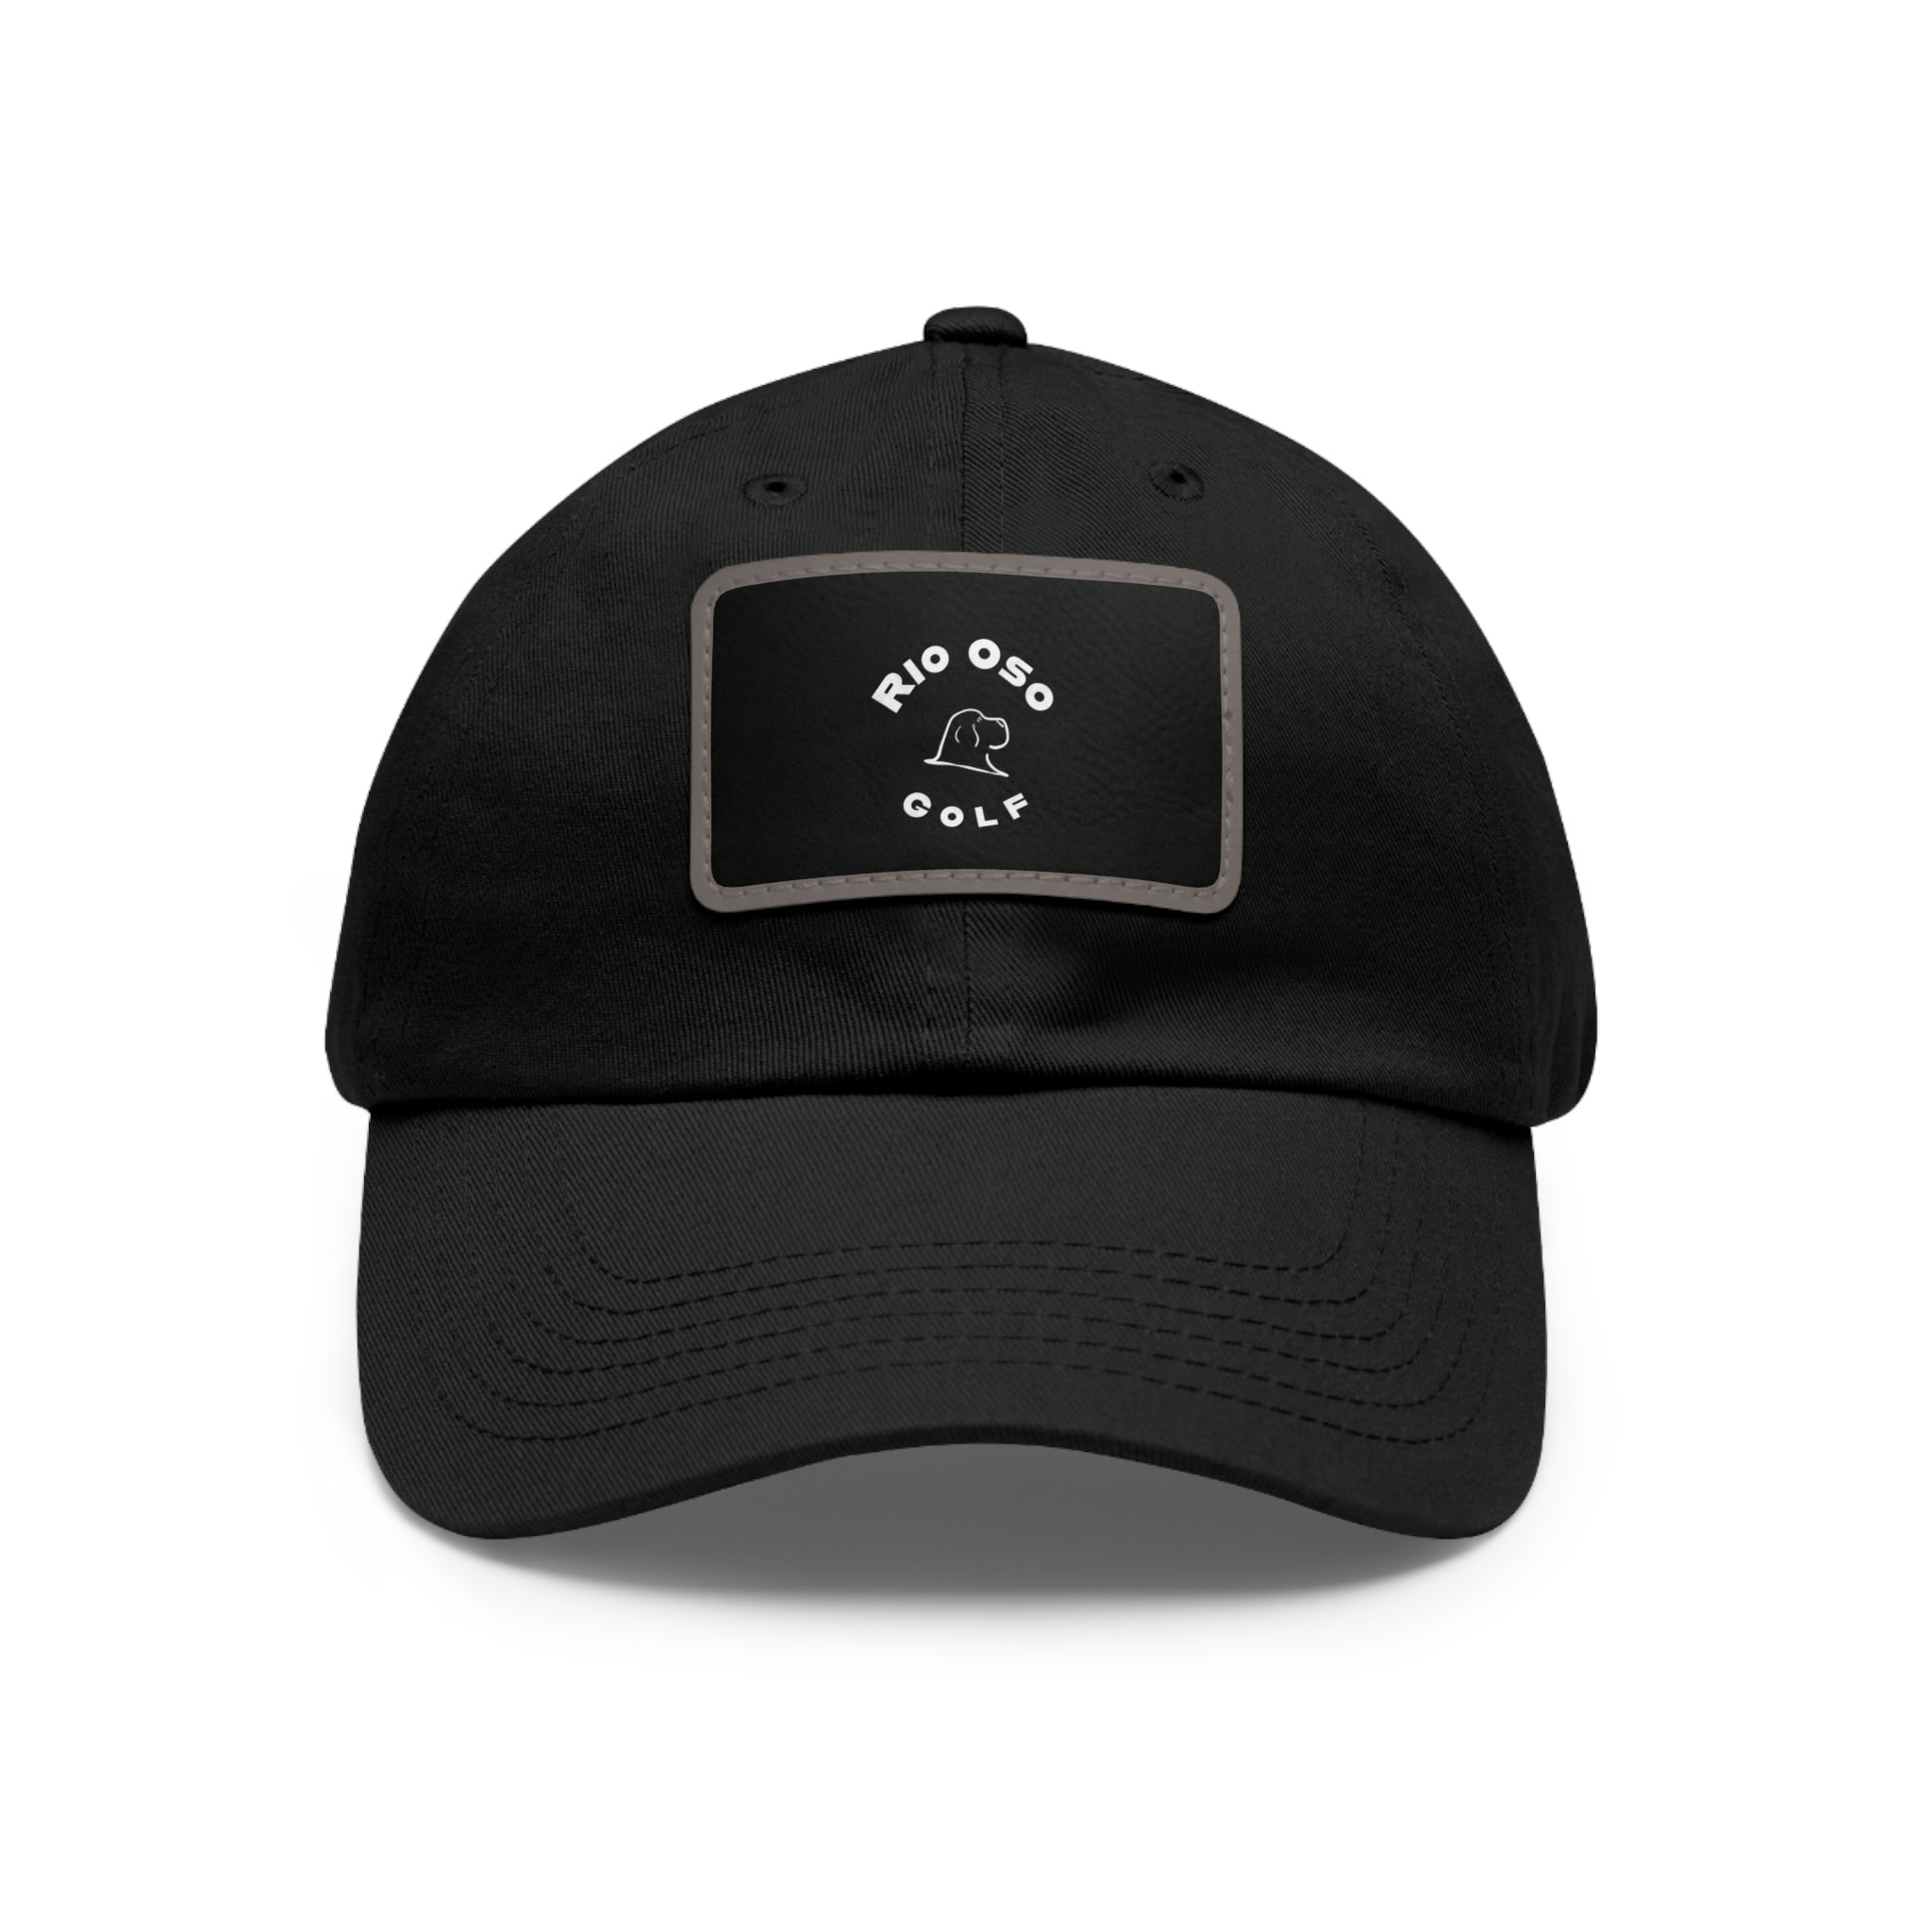 Rio Oso Golf Leather Patch Dad Hat (Dog Logo)